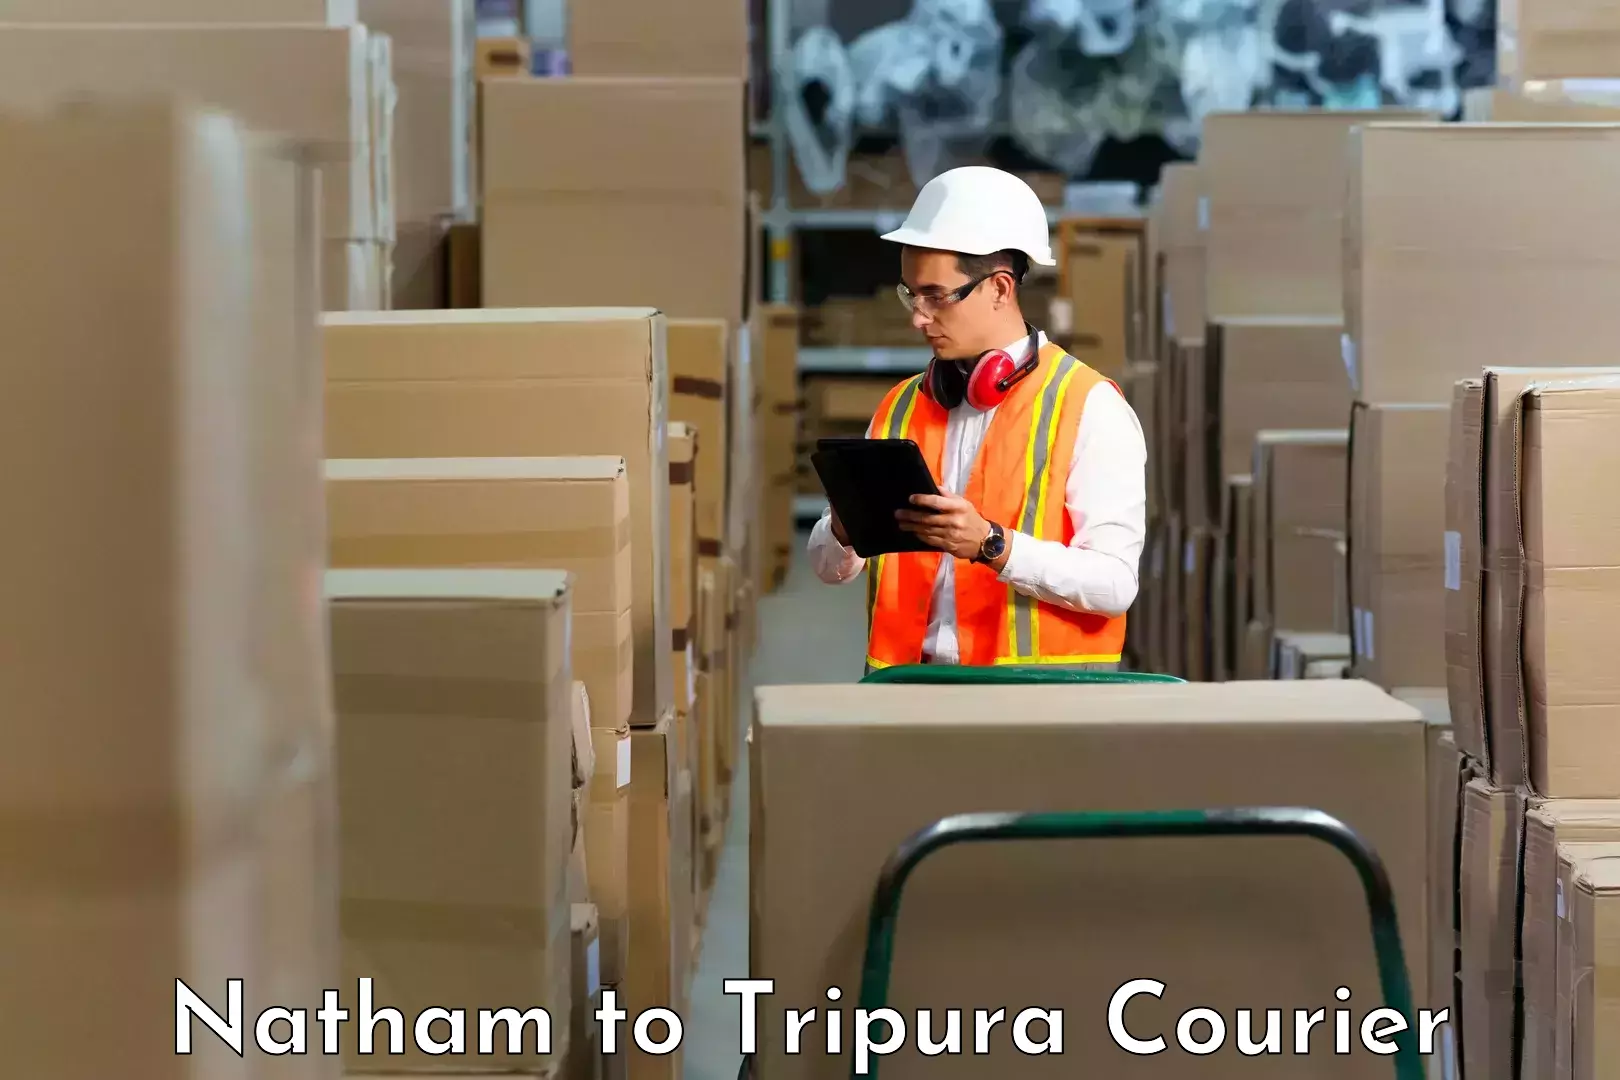 Courier service comparison Natham to West Tripura